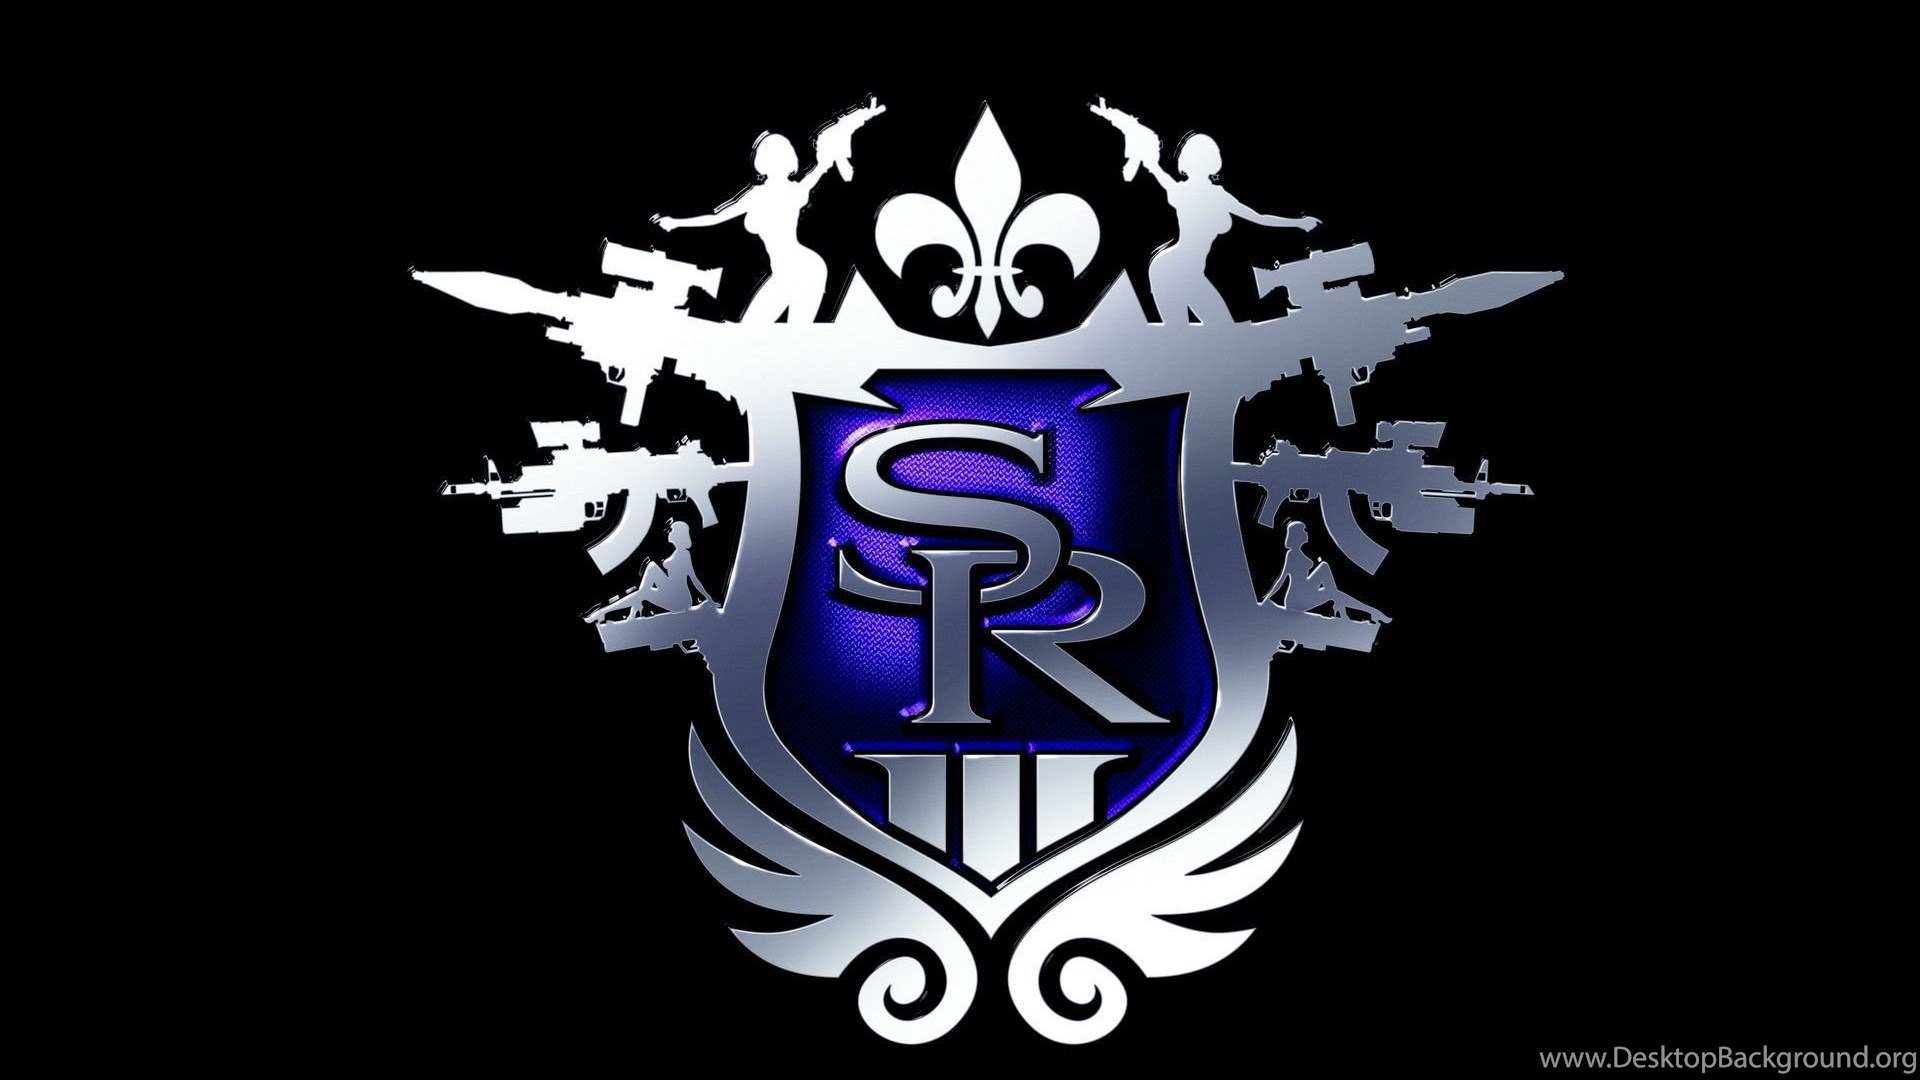 Lets row. Saints Row. Saints Row лого. Saints Row 3 логотип. Saints Row эмблема святых.